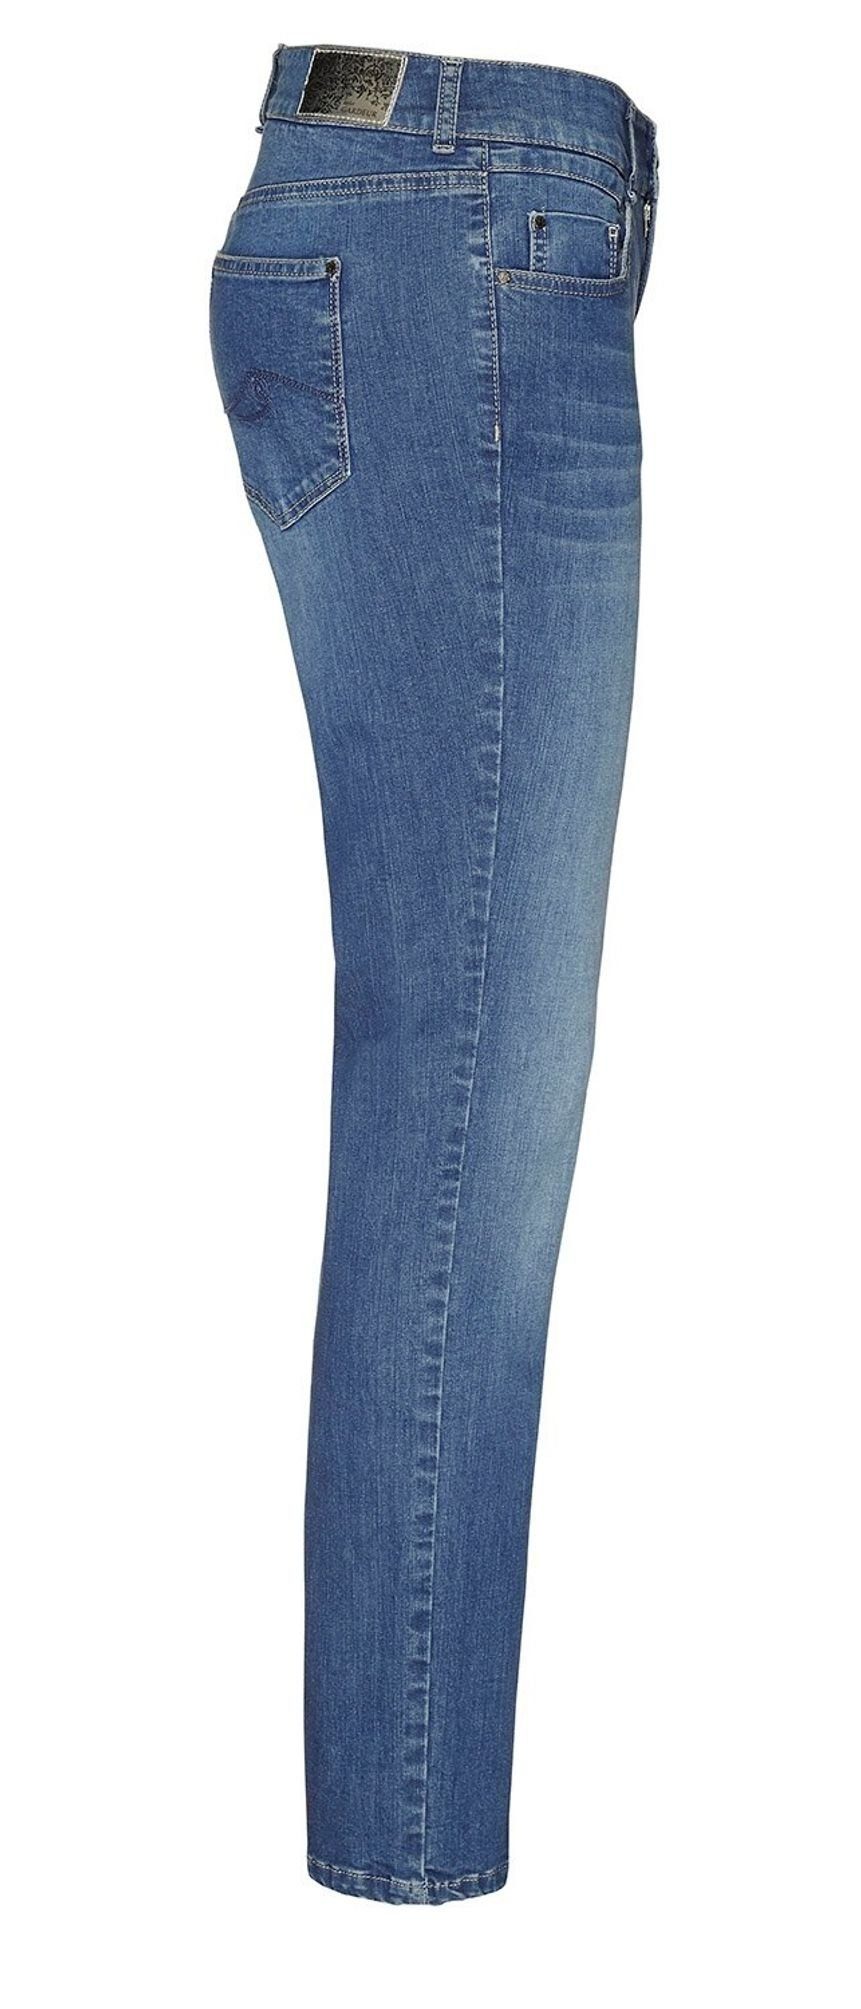 Atelier GARDEUR 5-Pocket-Jeans 601021 bleach